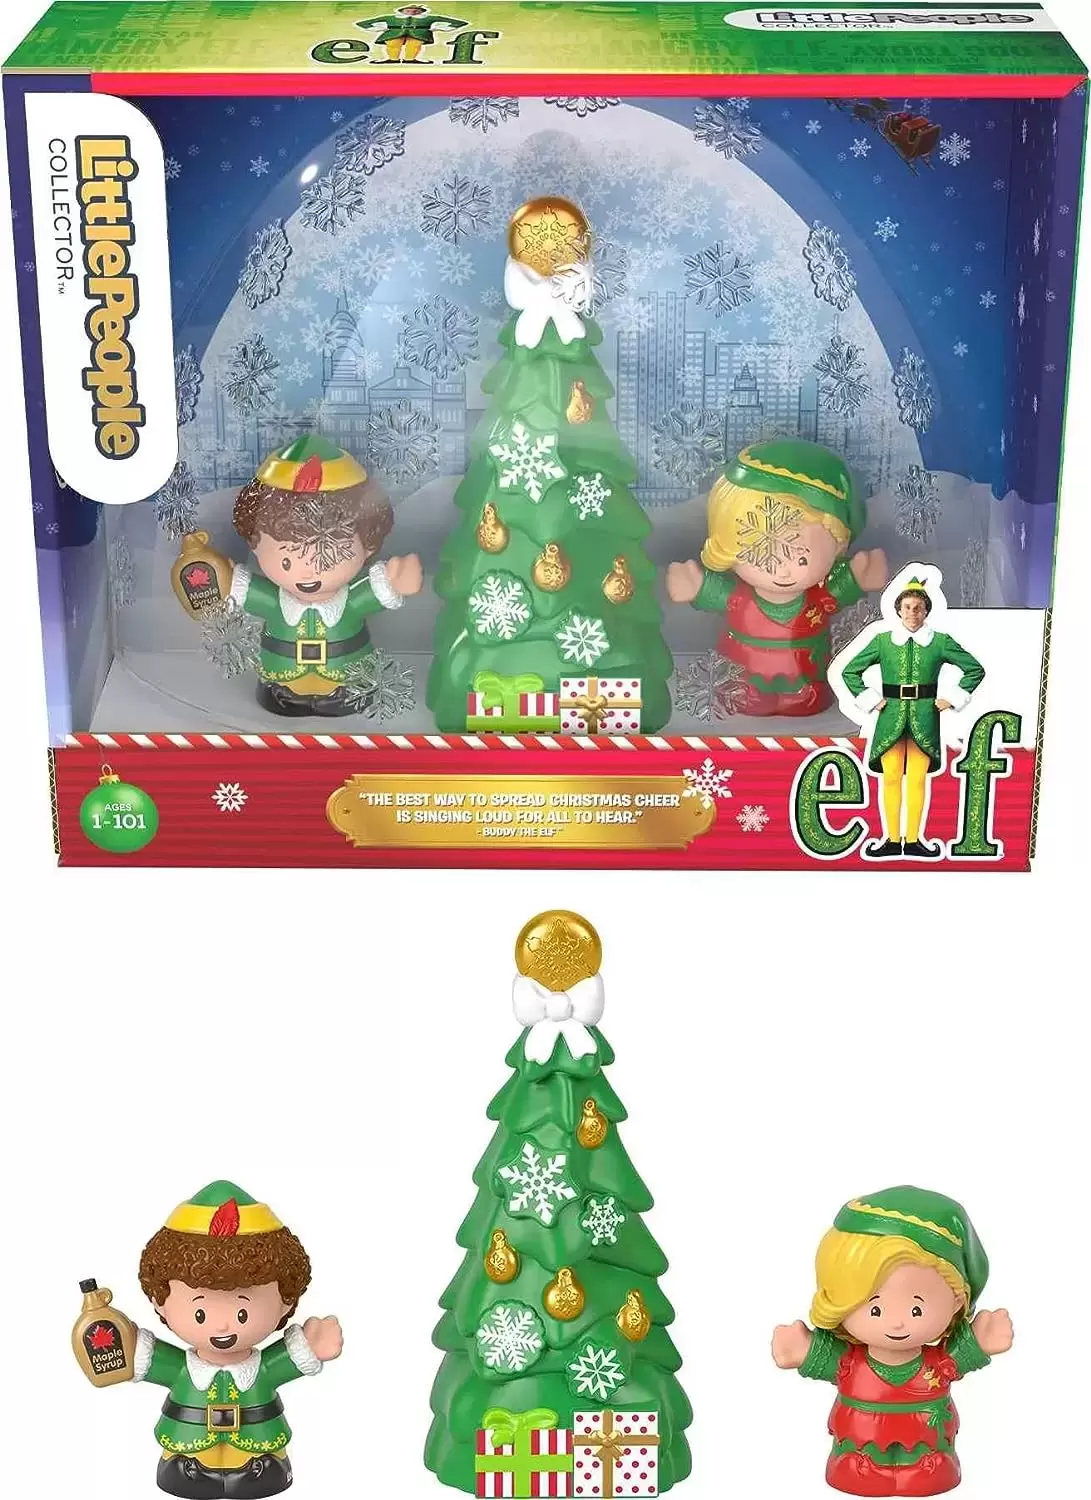 Little people - Elf Collector Set